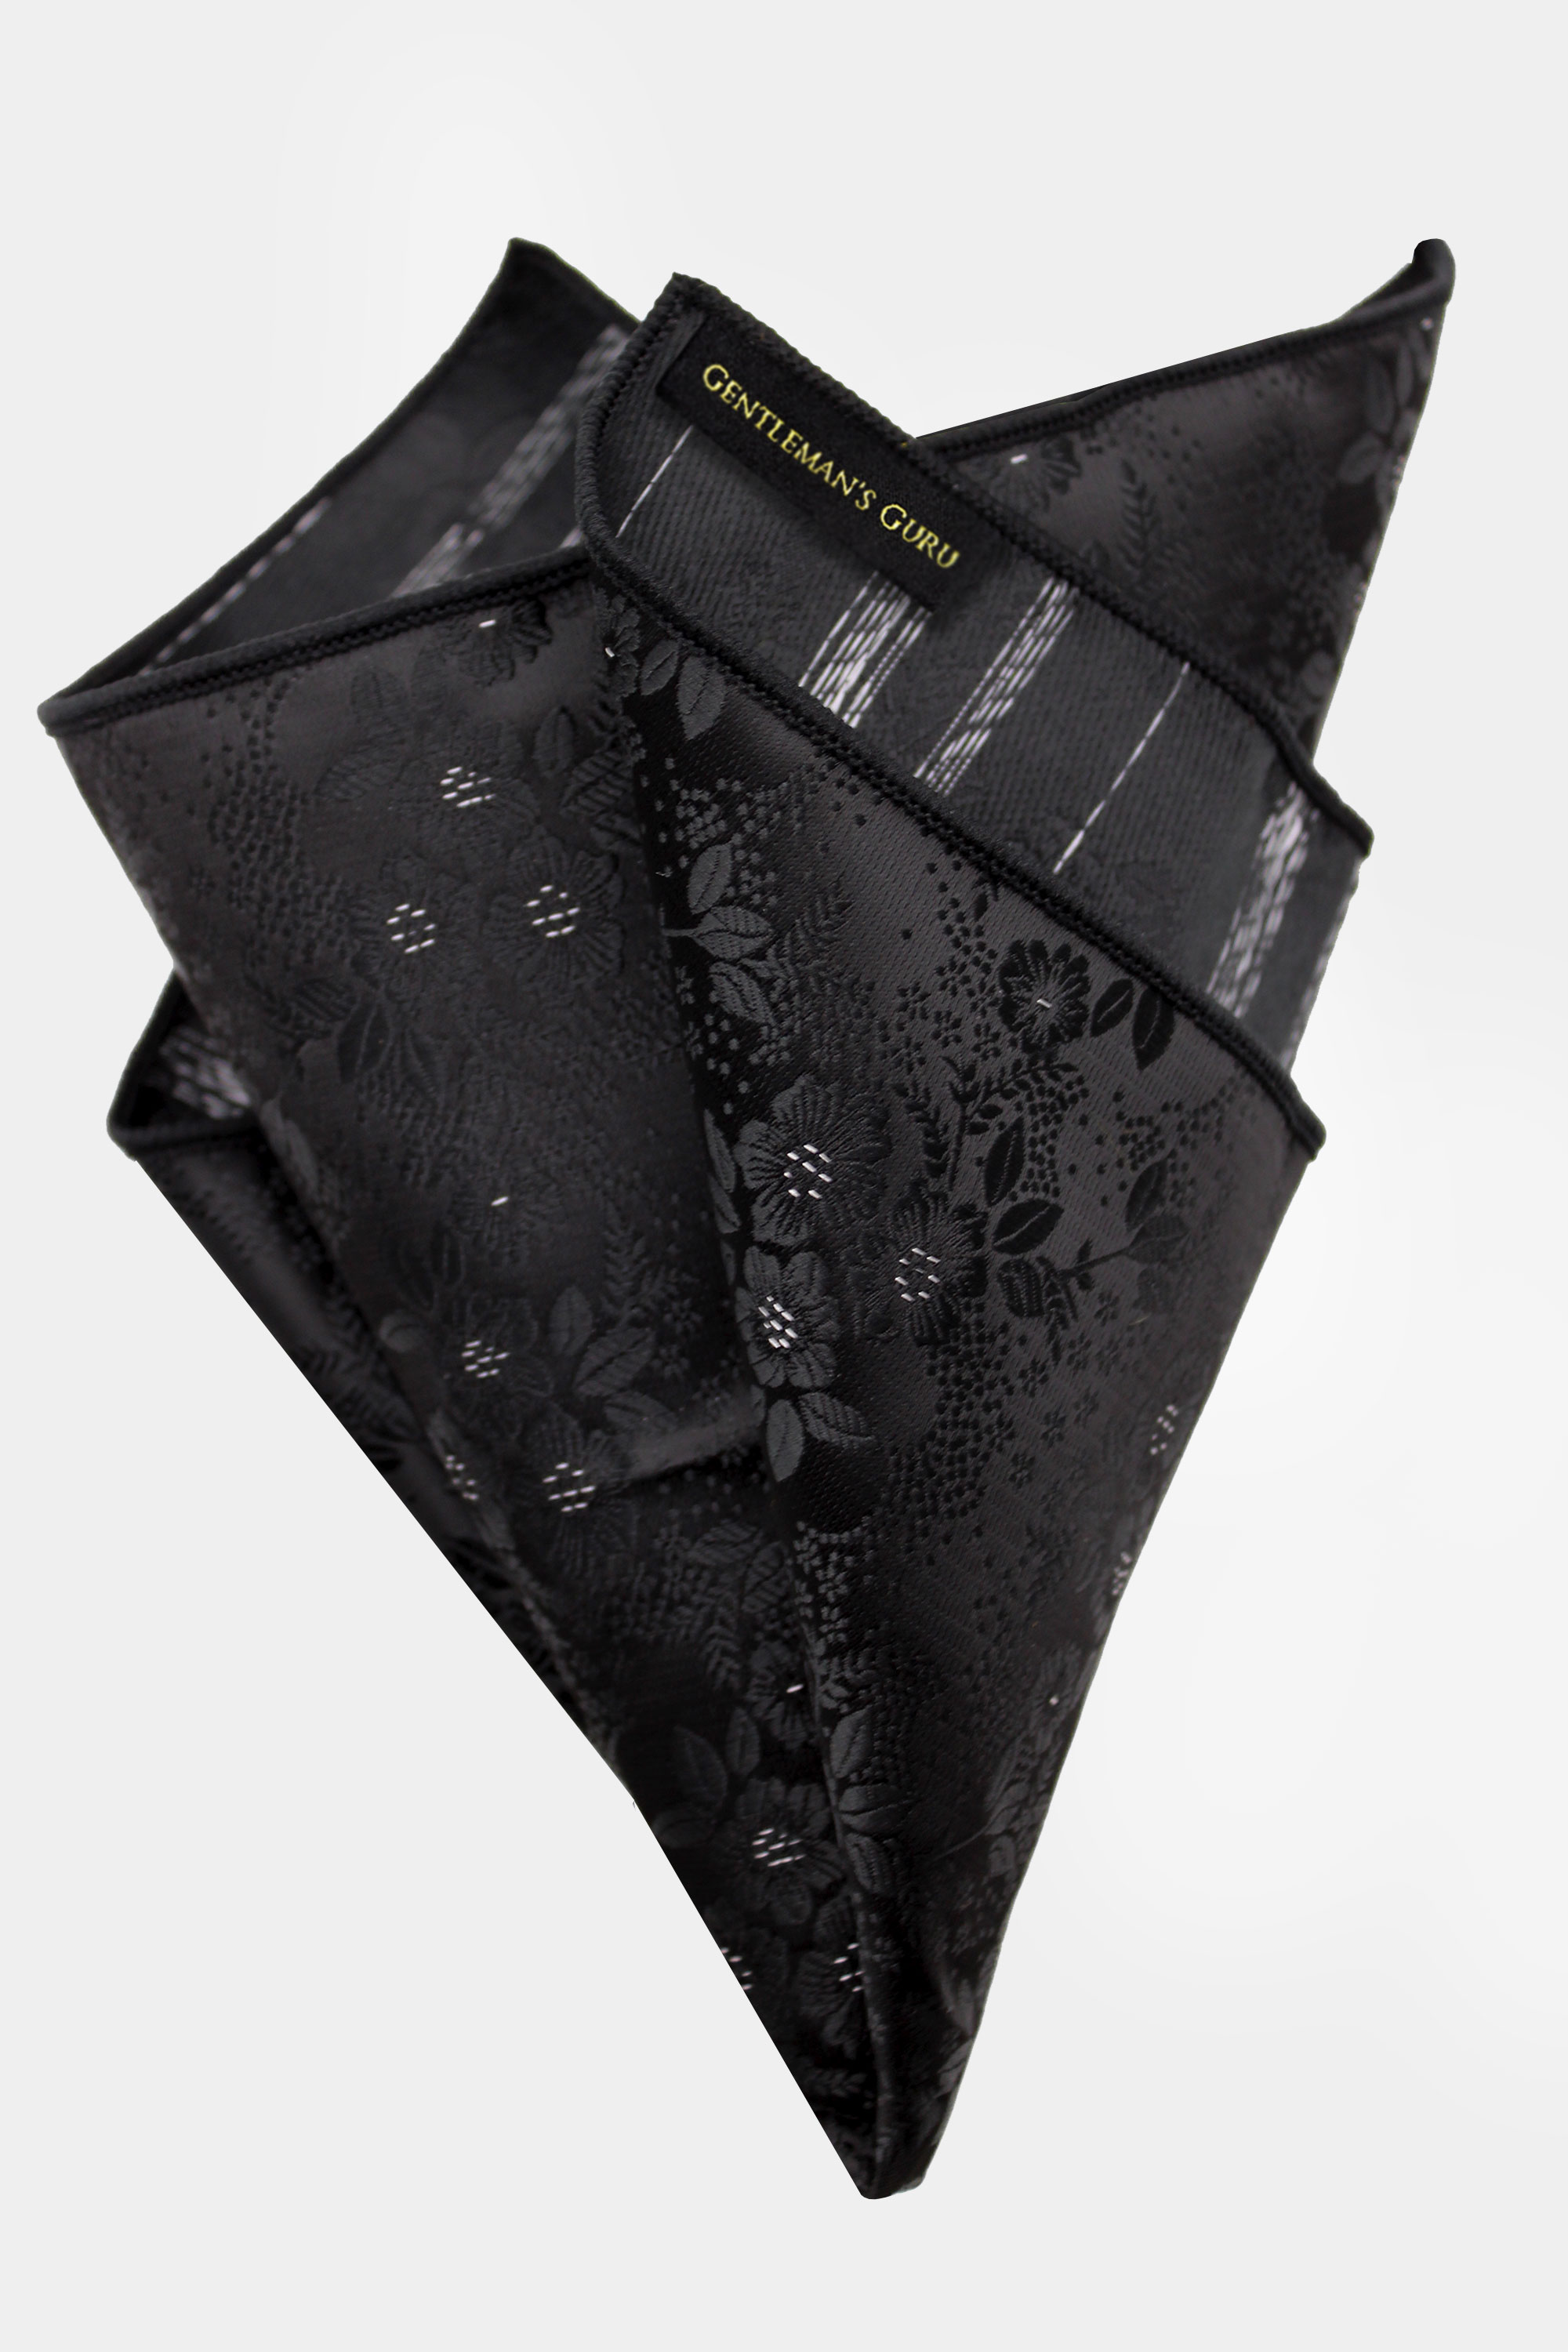 Black-Floral-Pocket-Square-Handkerchief-from-Gentlemansguru.com